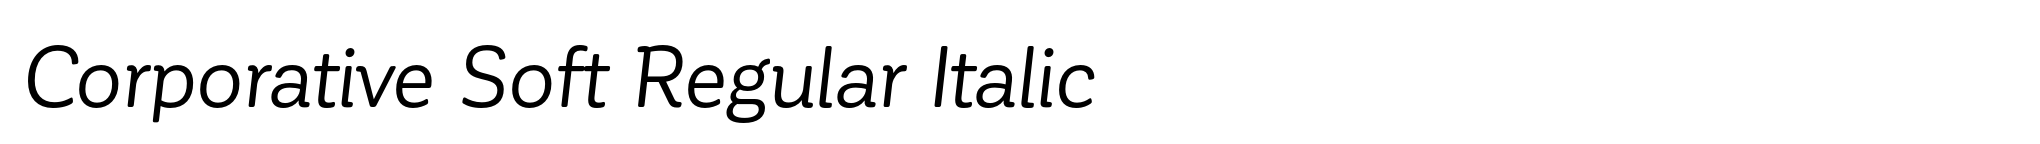 Corporative Soft Regular Italic image